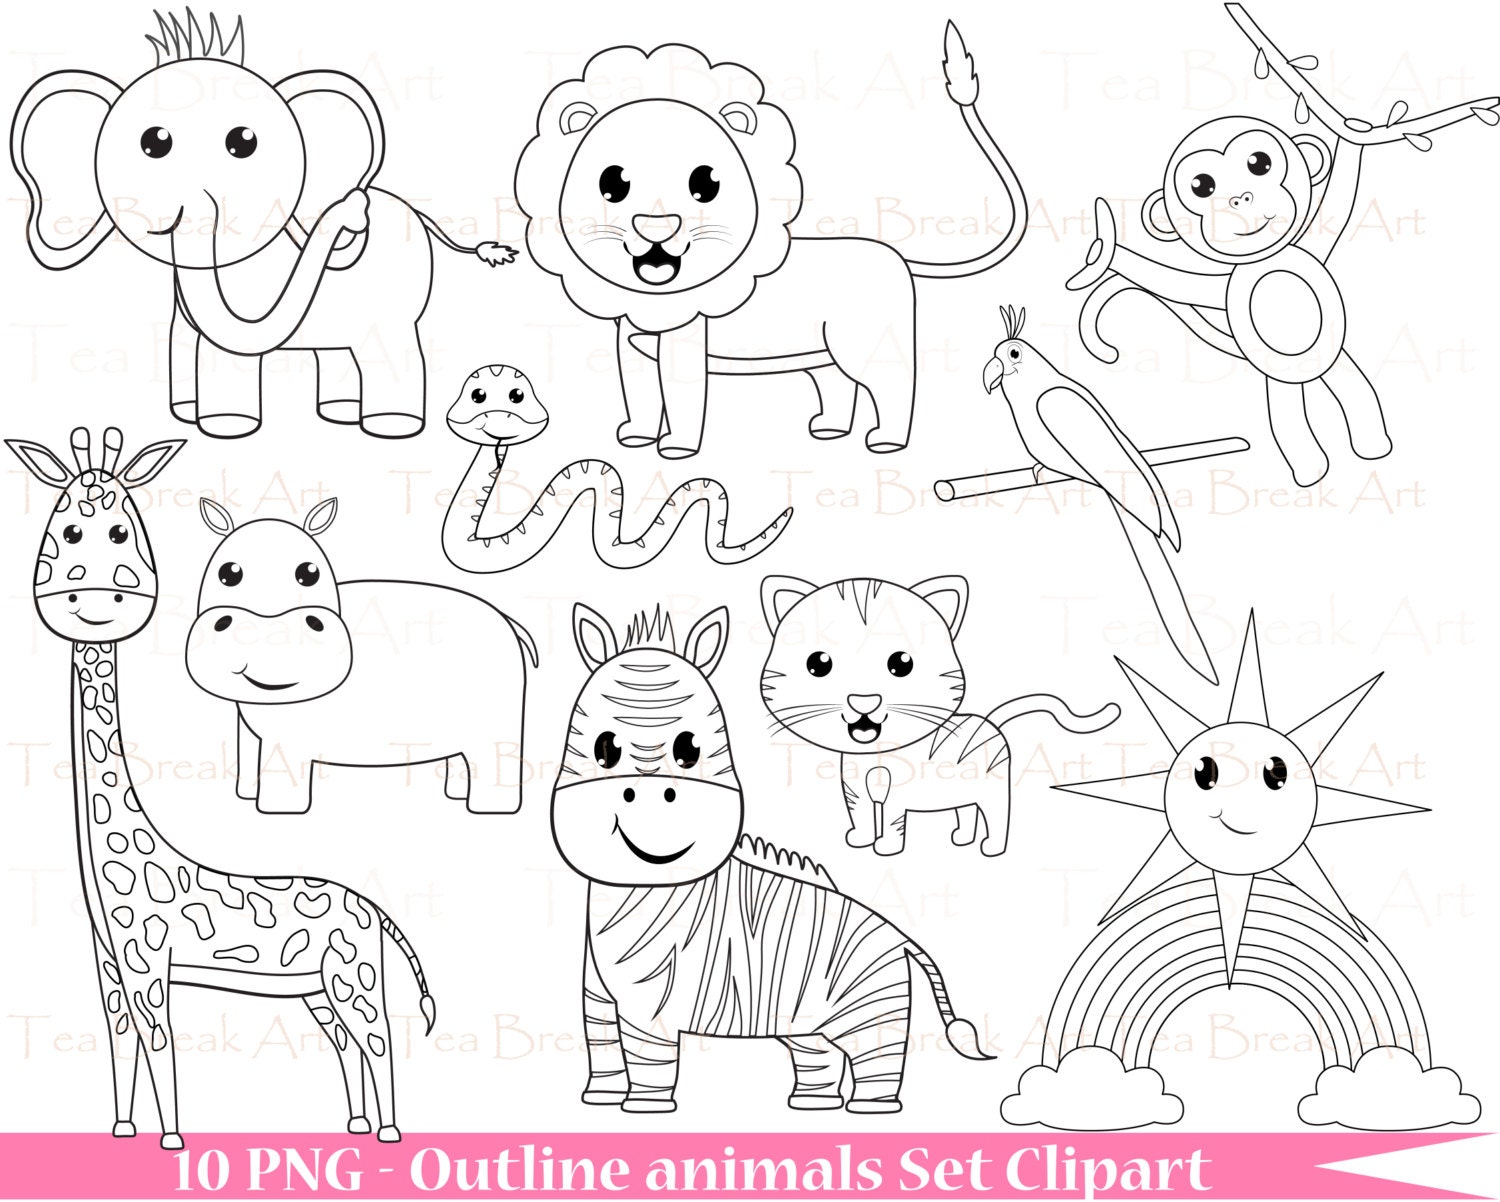 Outline Animals Set Clipart Digital Clip Art Graphics 027 | Etsy